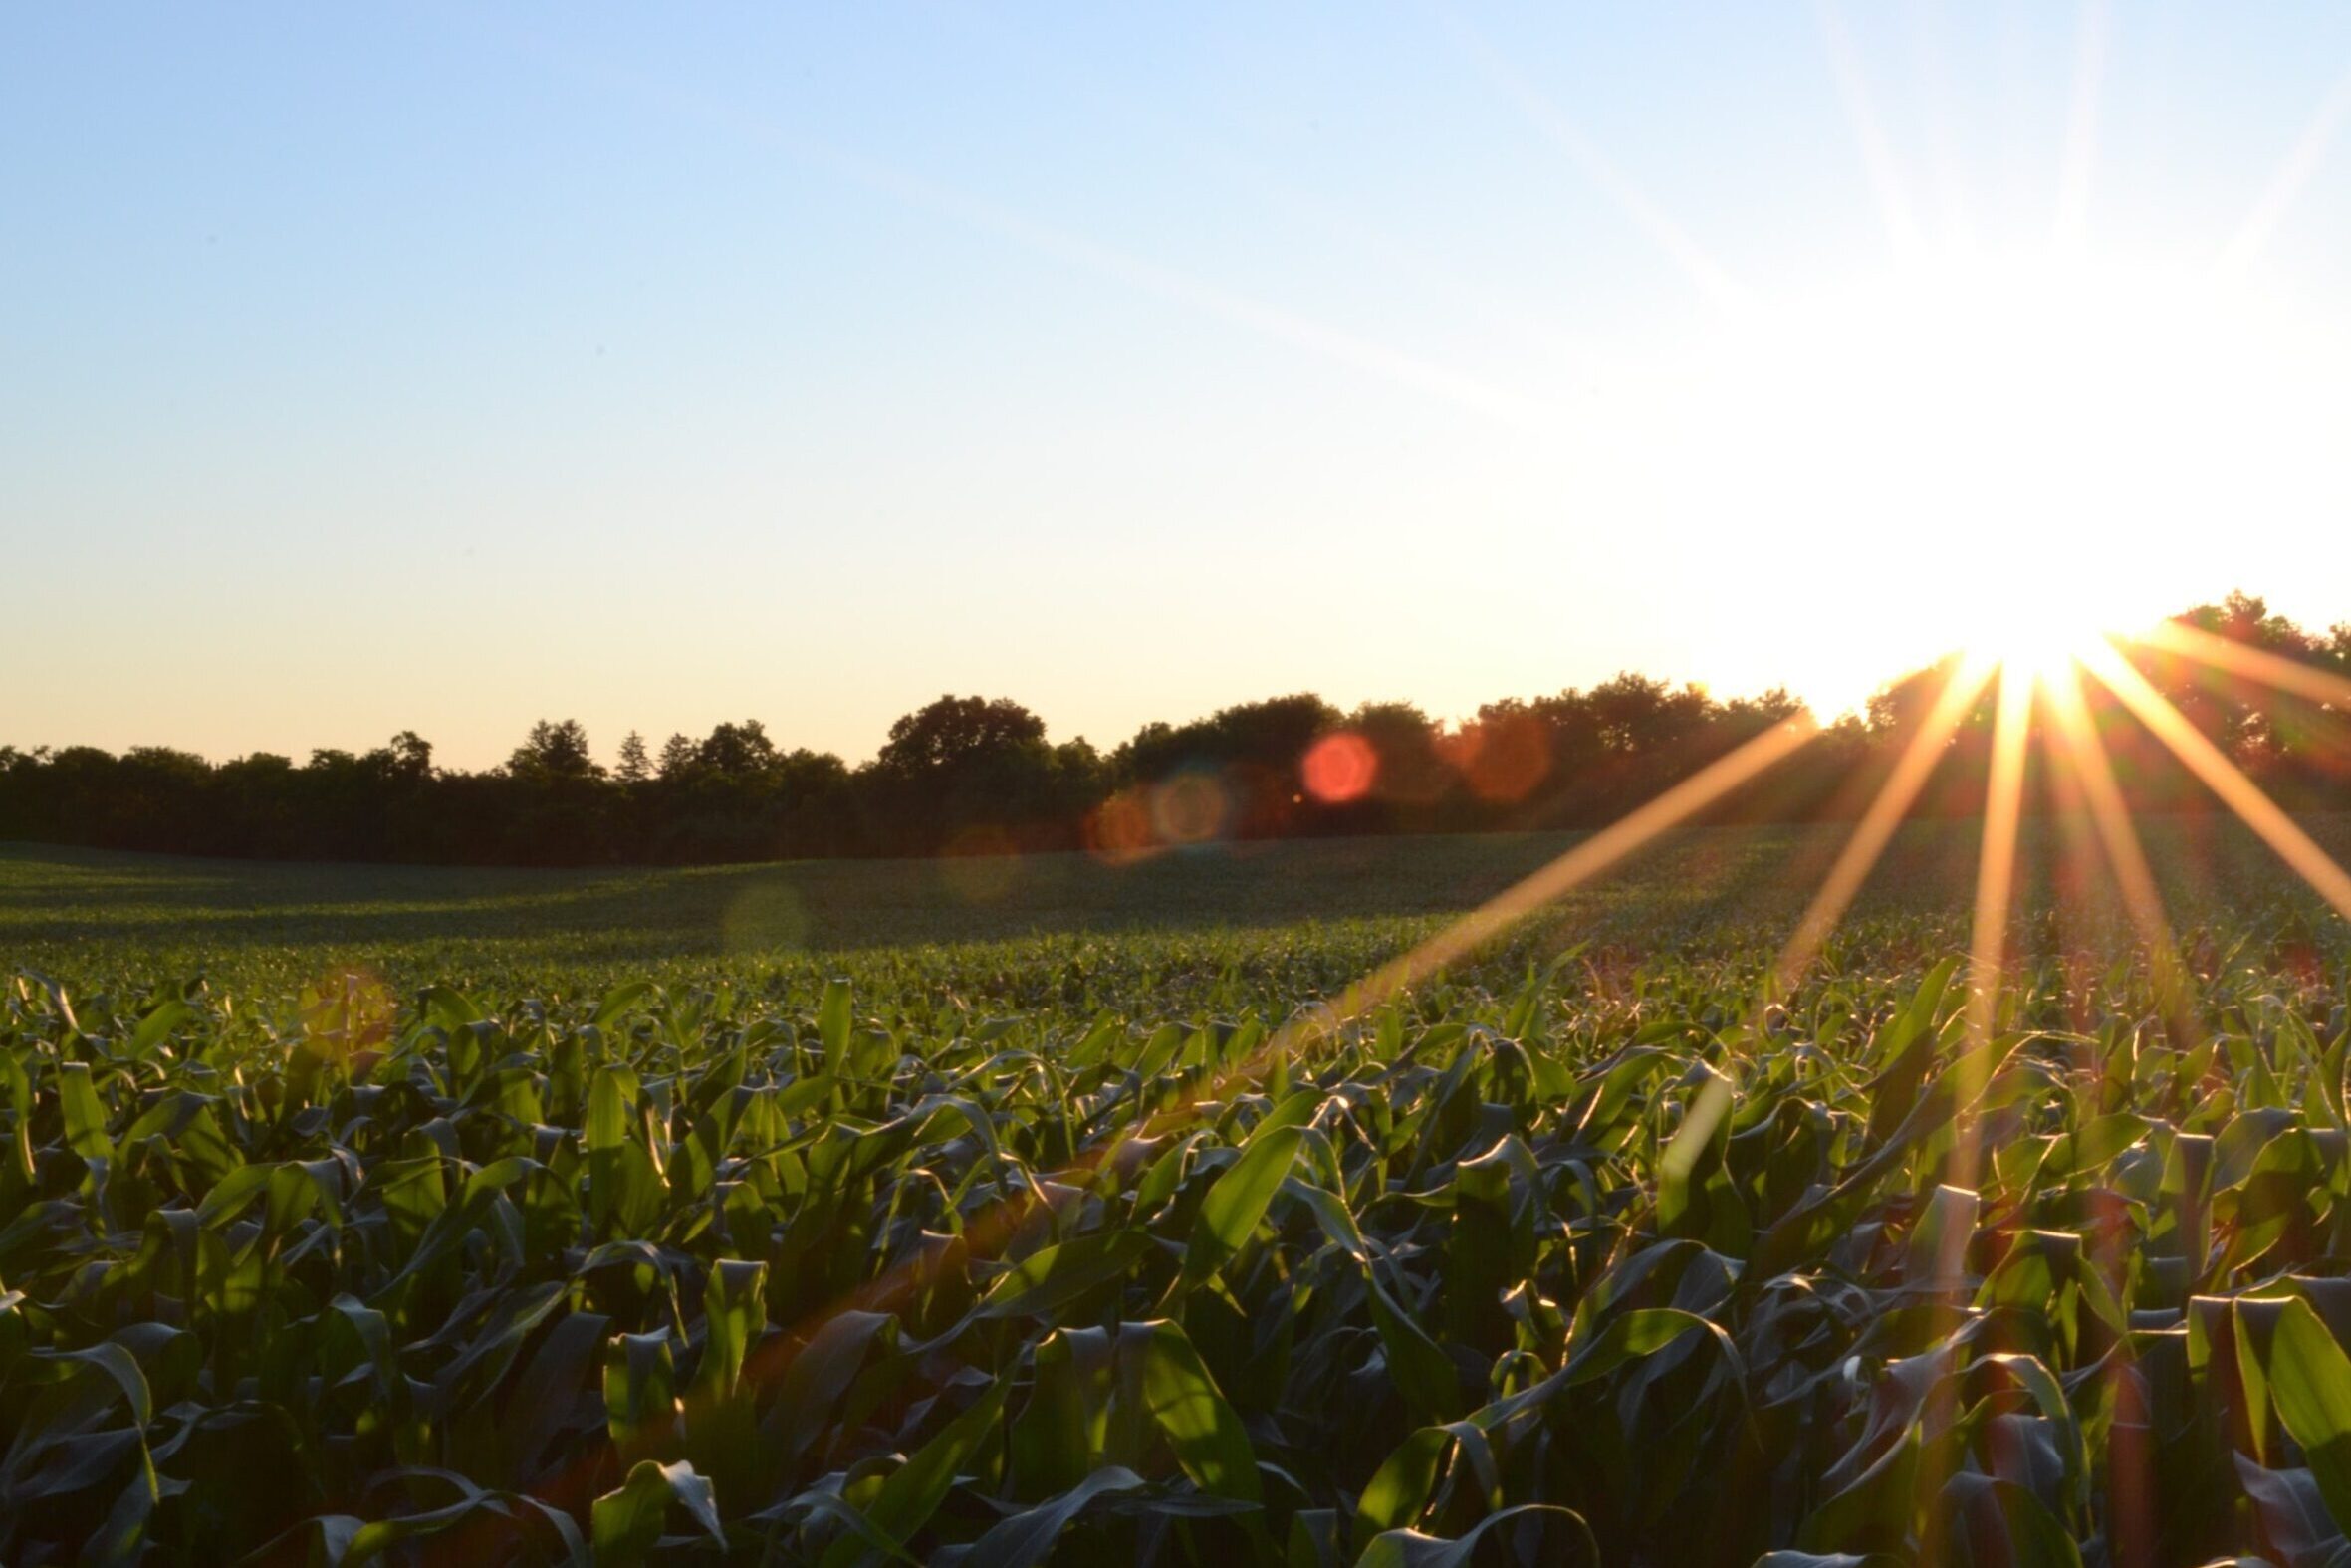 The sun rising over a corn field.